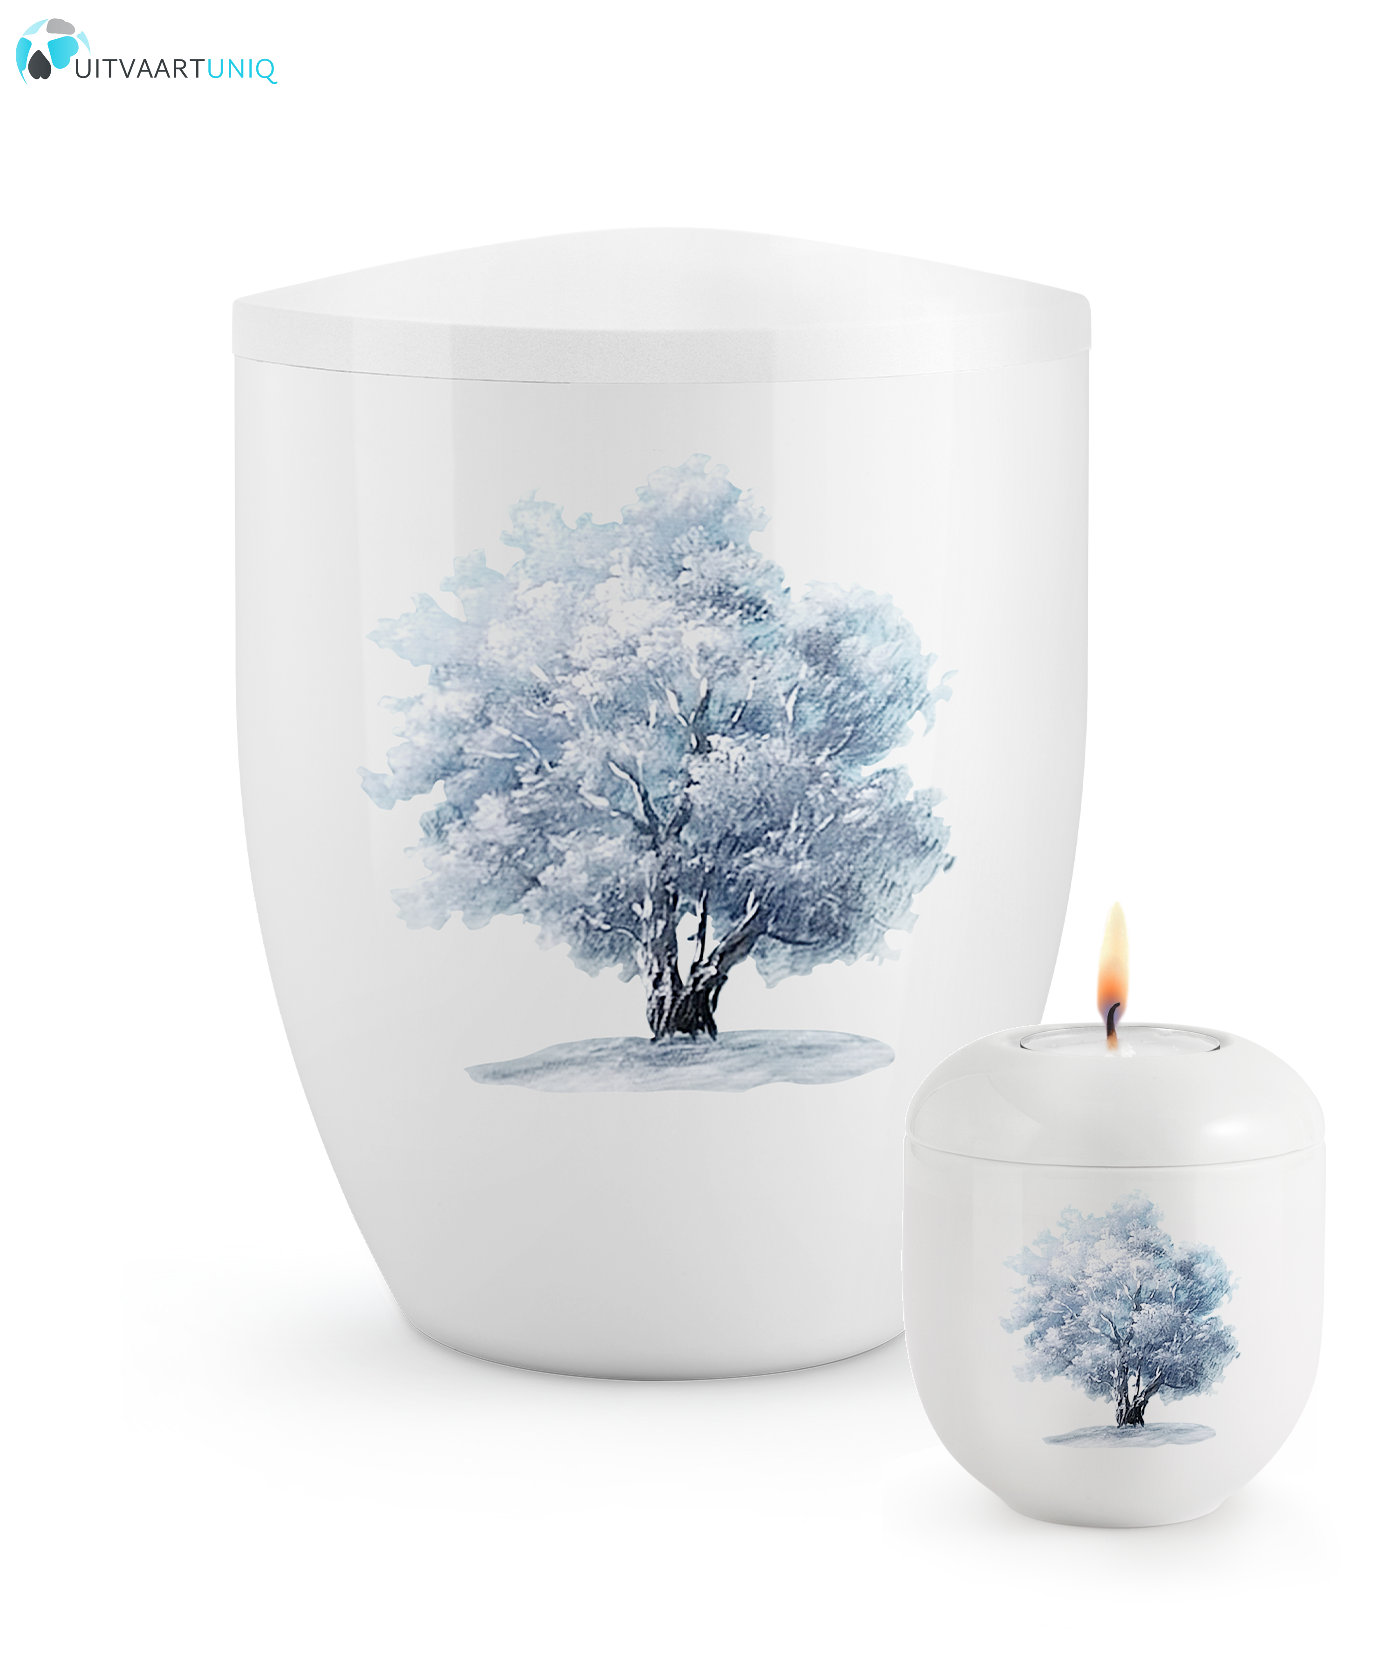  Mini urn Hoogglans wit winterboom  – met lichtje